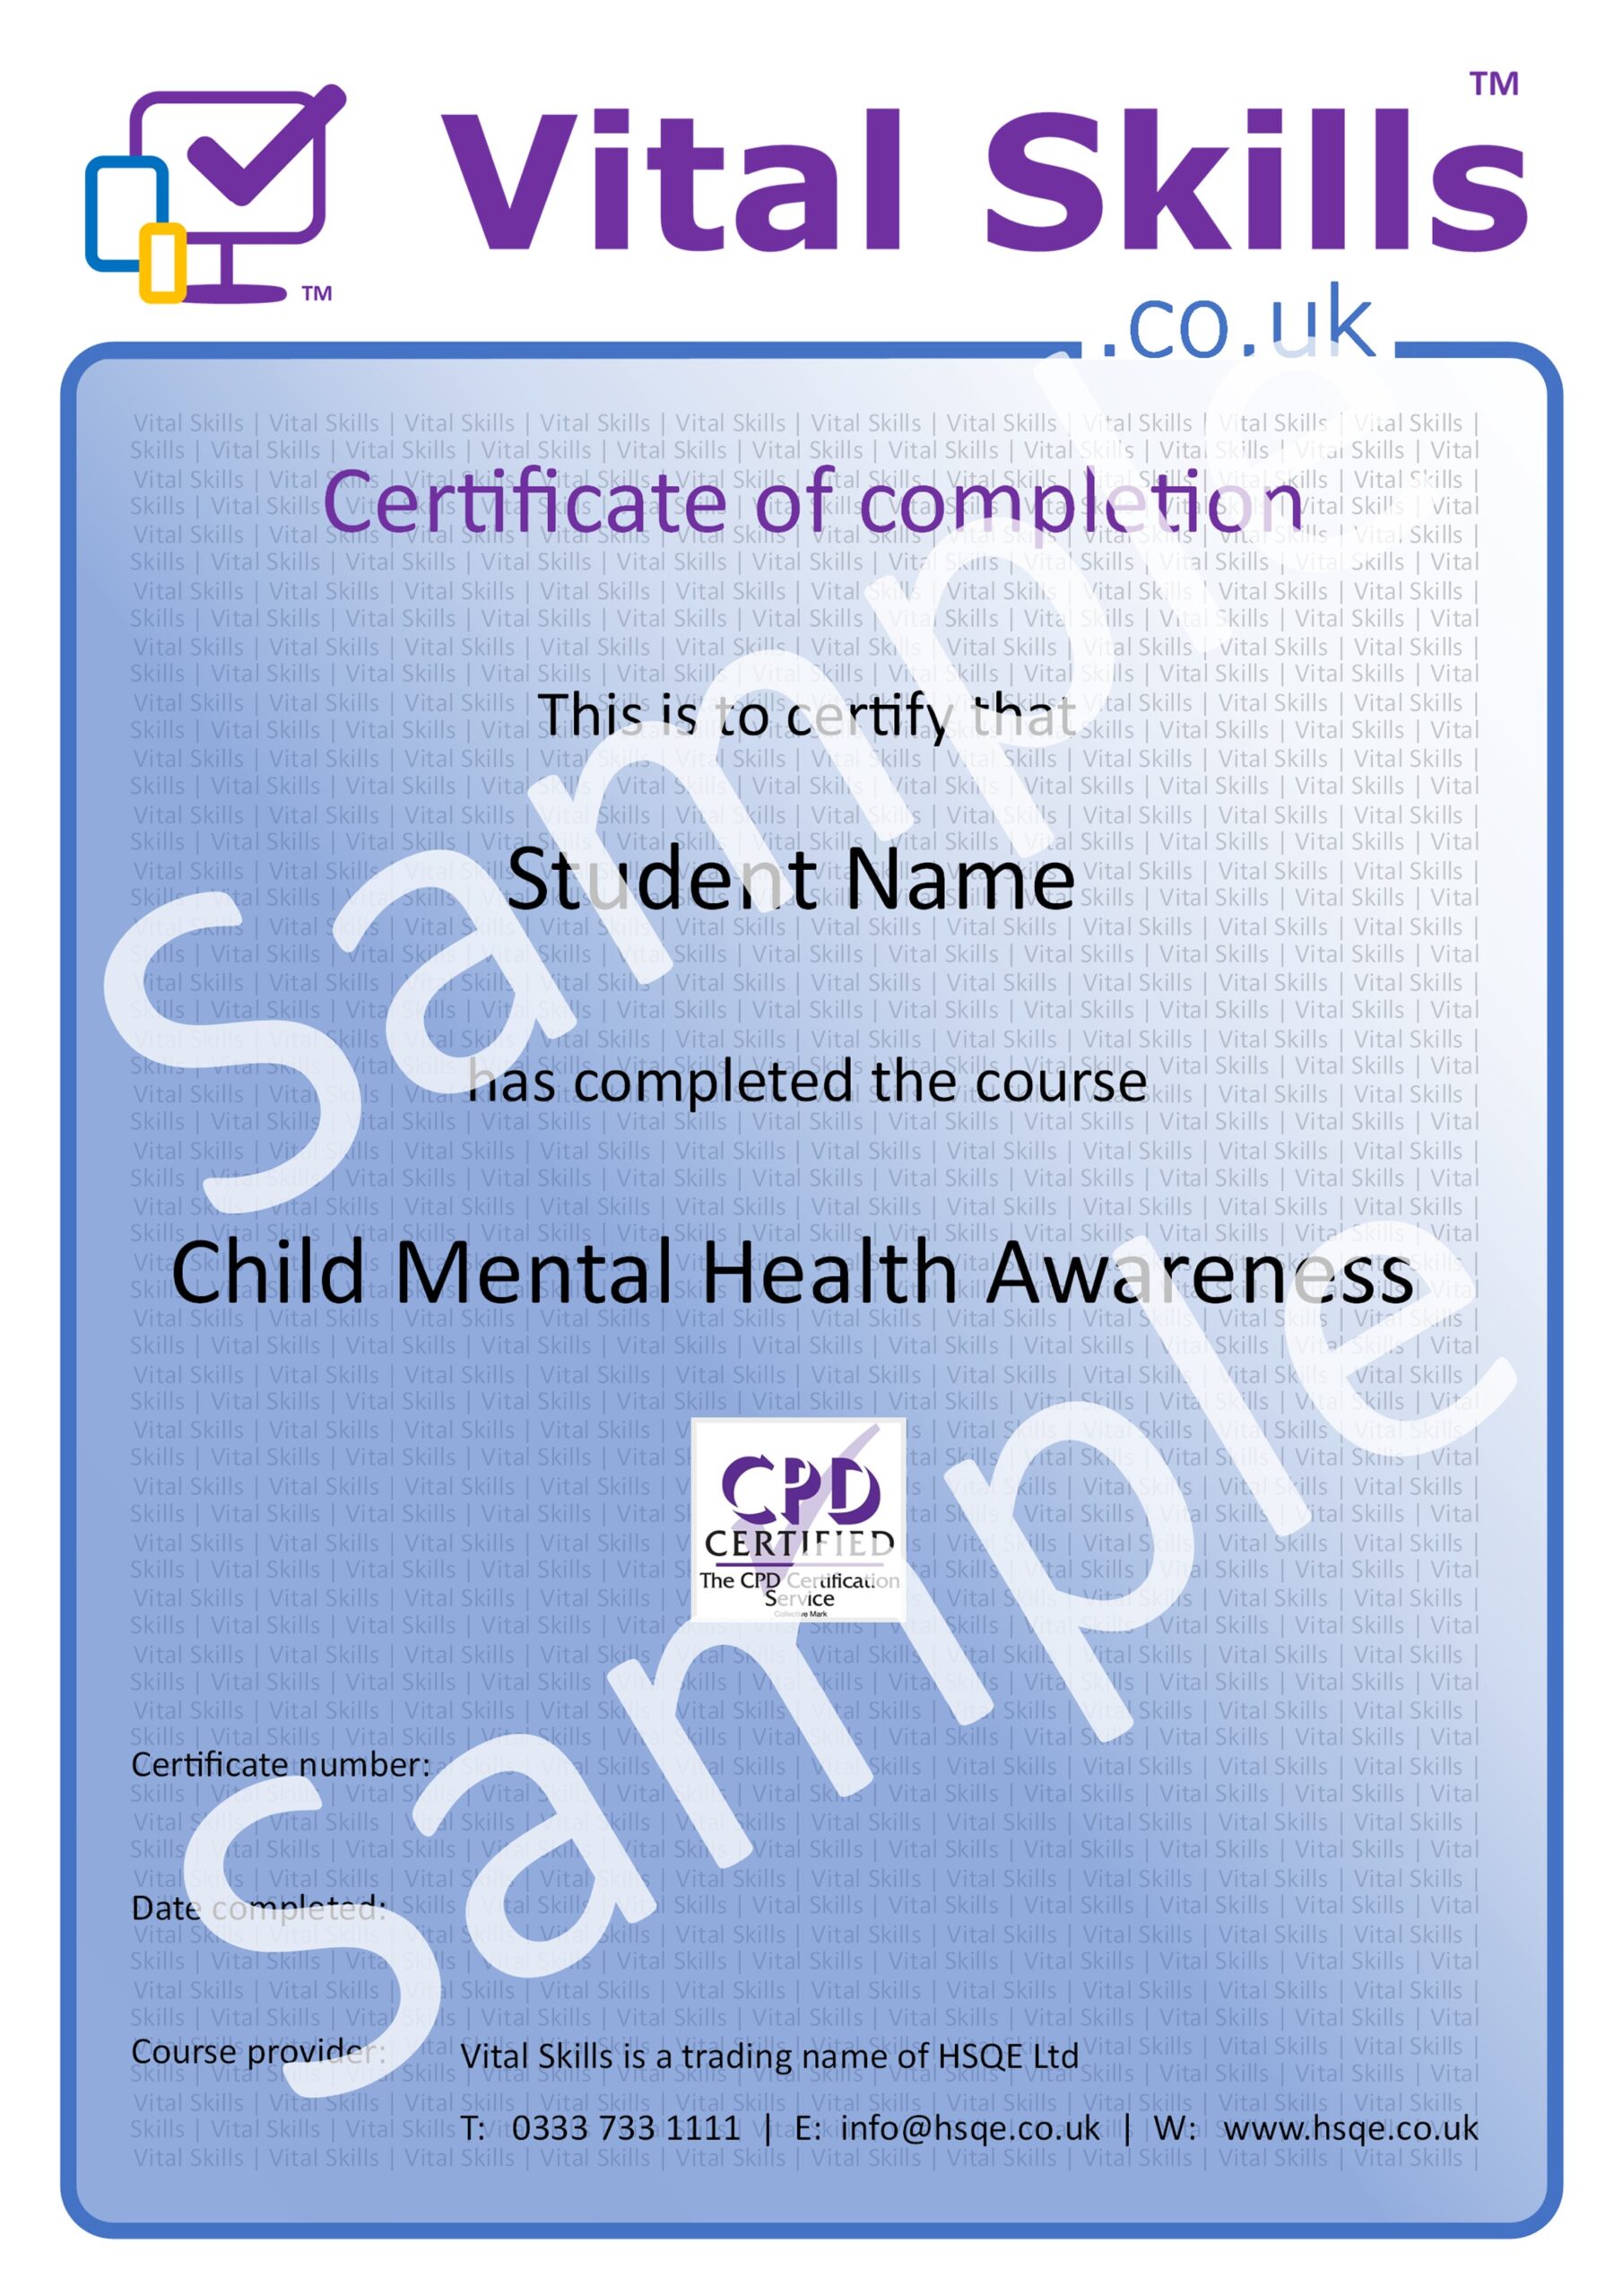 Child Mental Health Awareness Online Training Course Certificate HSQE Vital Skills